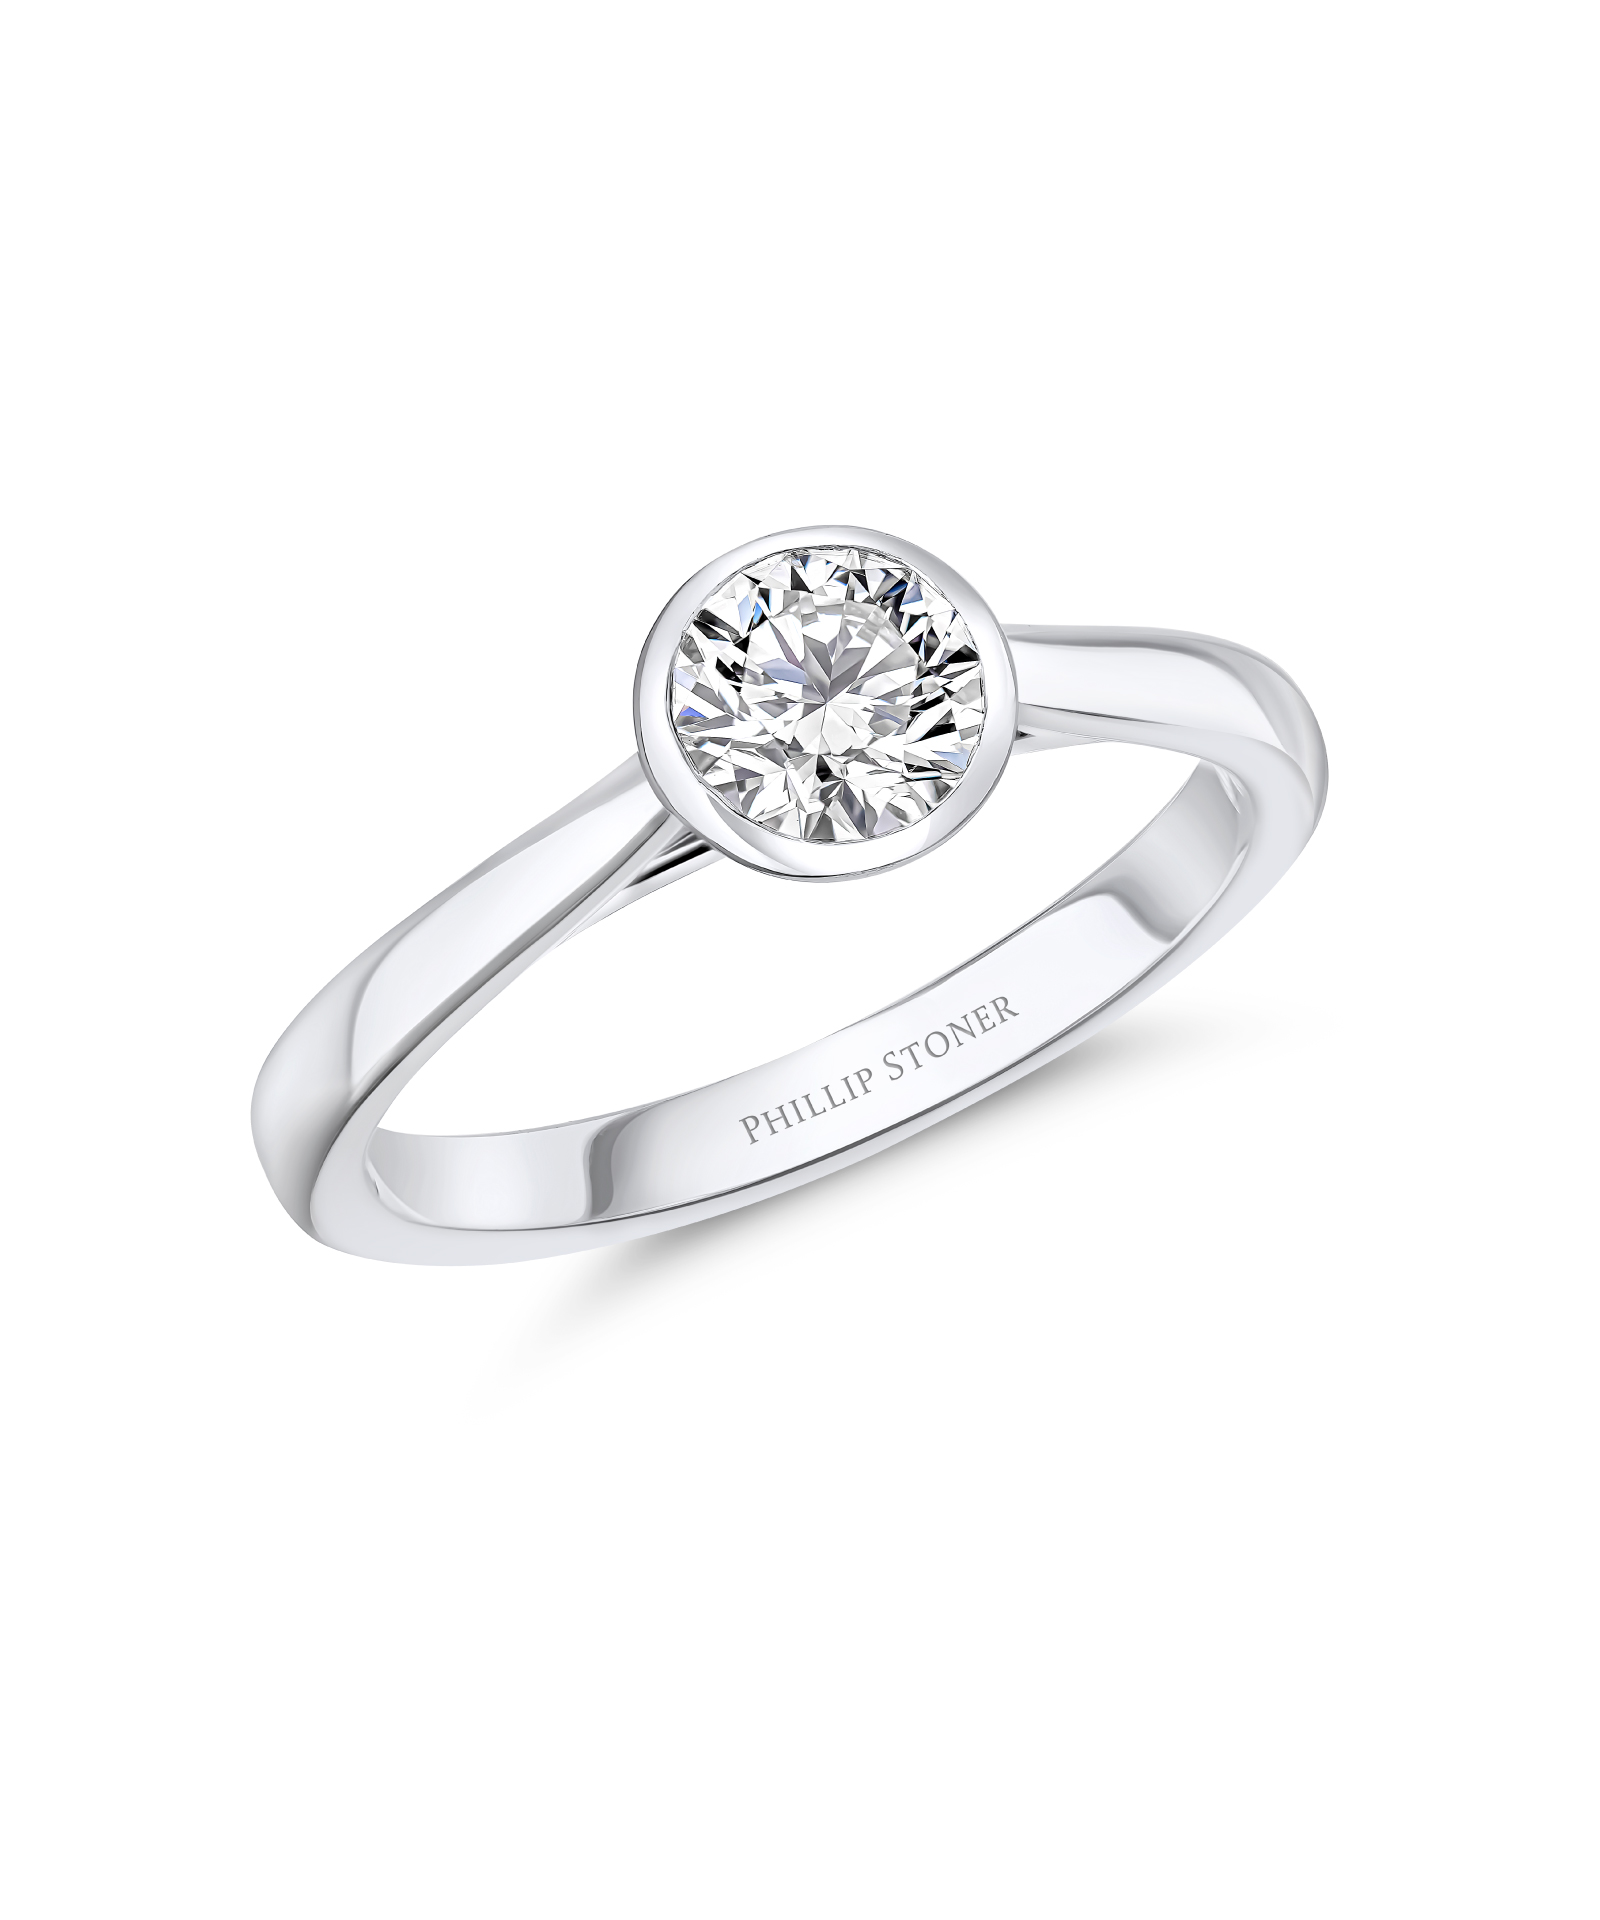 0.70ct Round Brilliant Cut Diamond Rubover Engagement Ring - Phillip Stoner The Jeweller